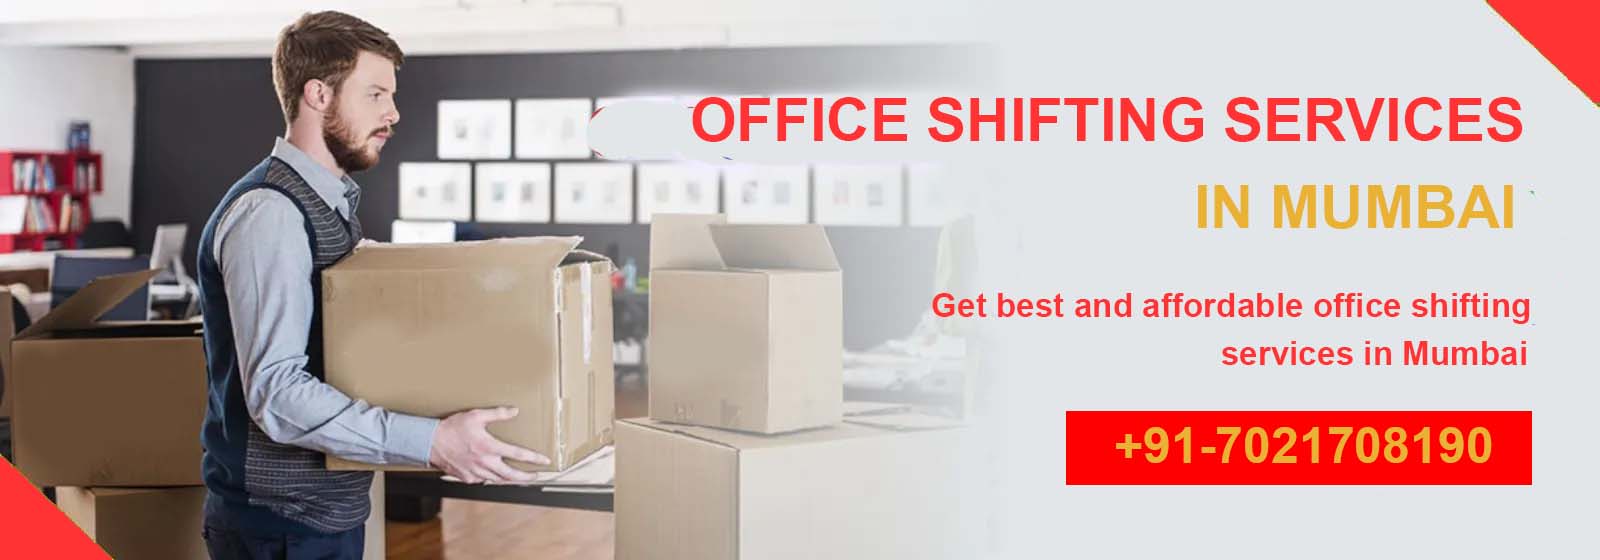 Office Shifting Service Mumbai